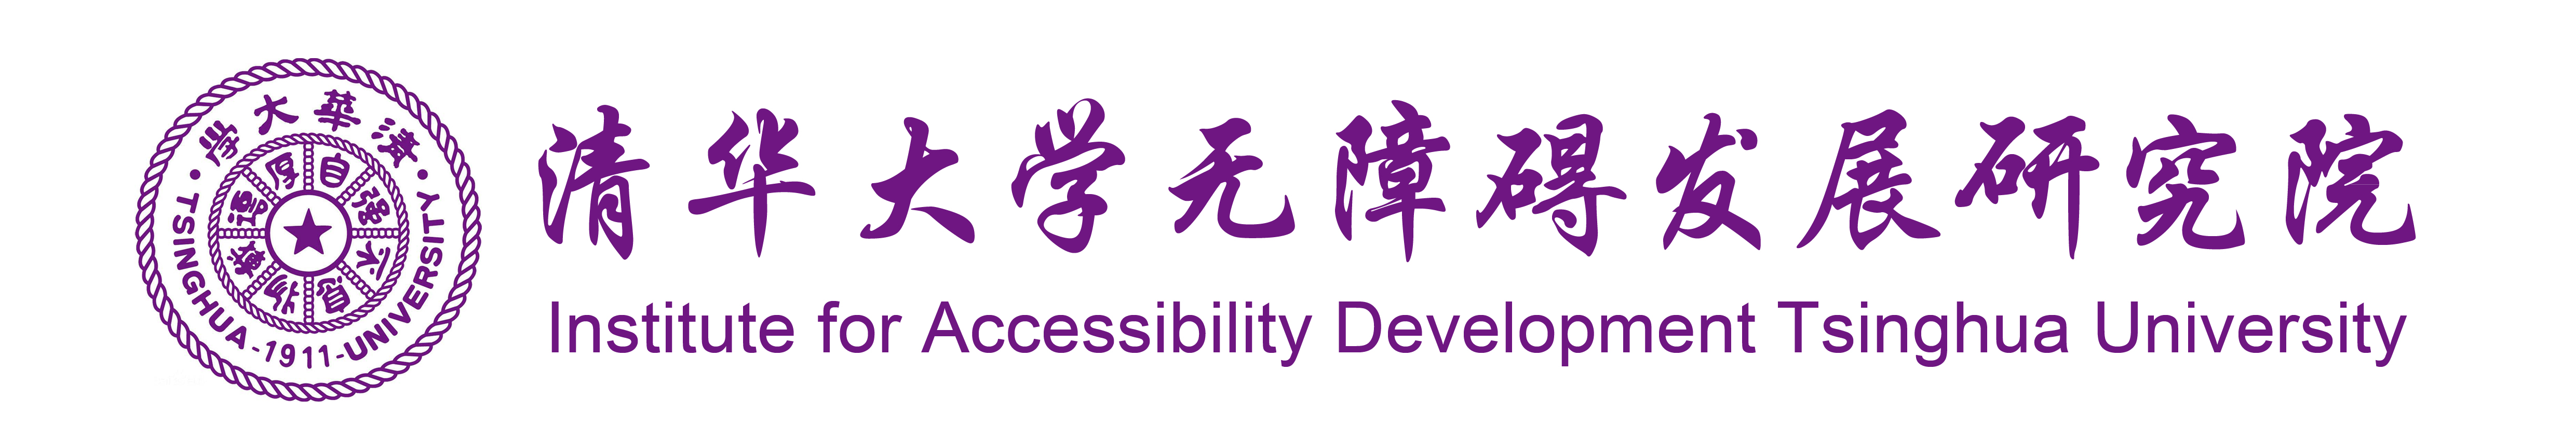 Logo of Institute for Accessibility Development Tsinghua University 